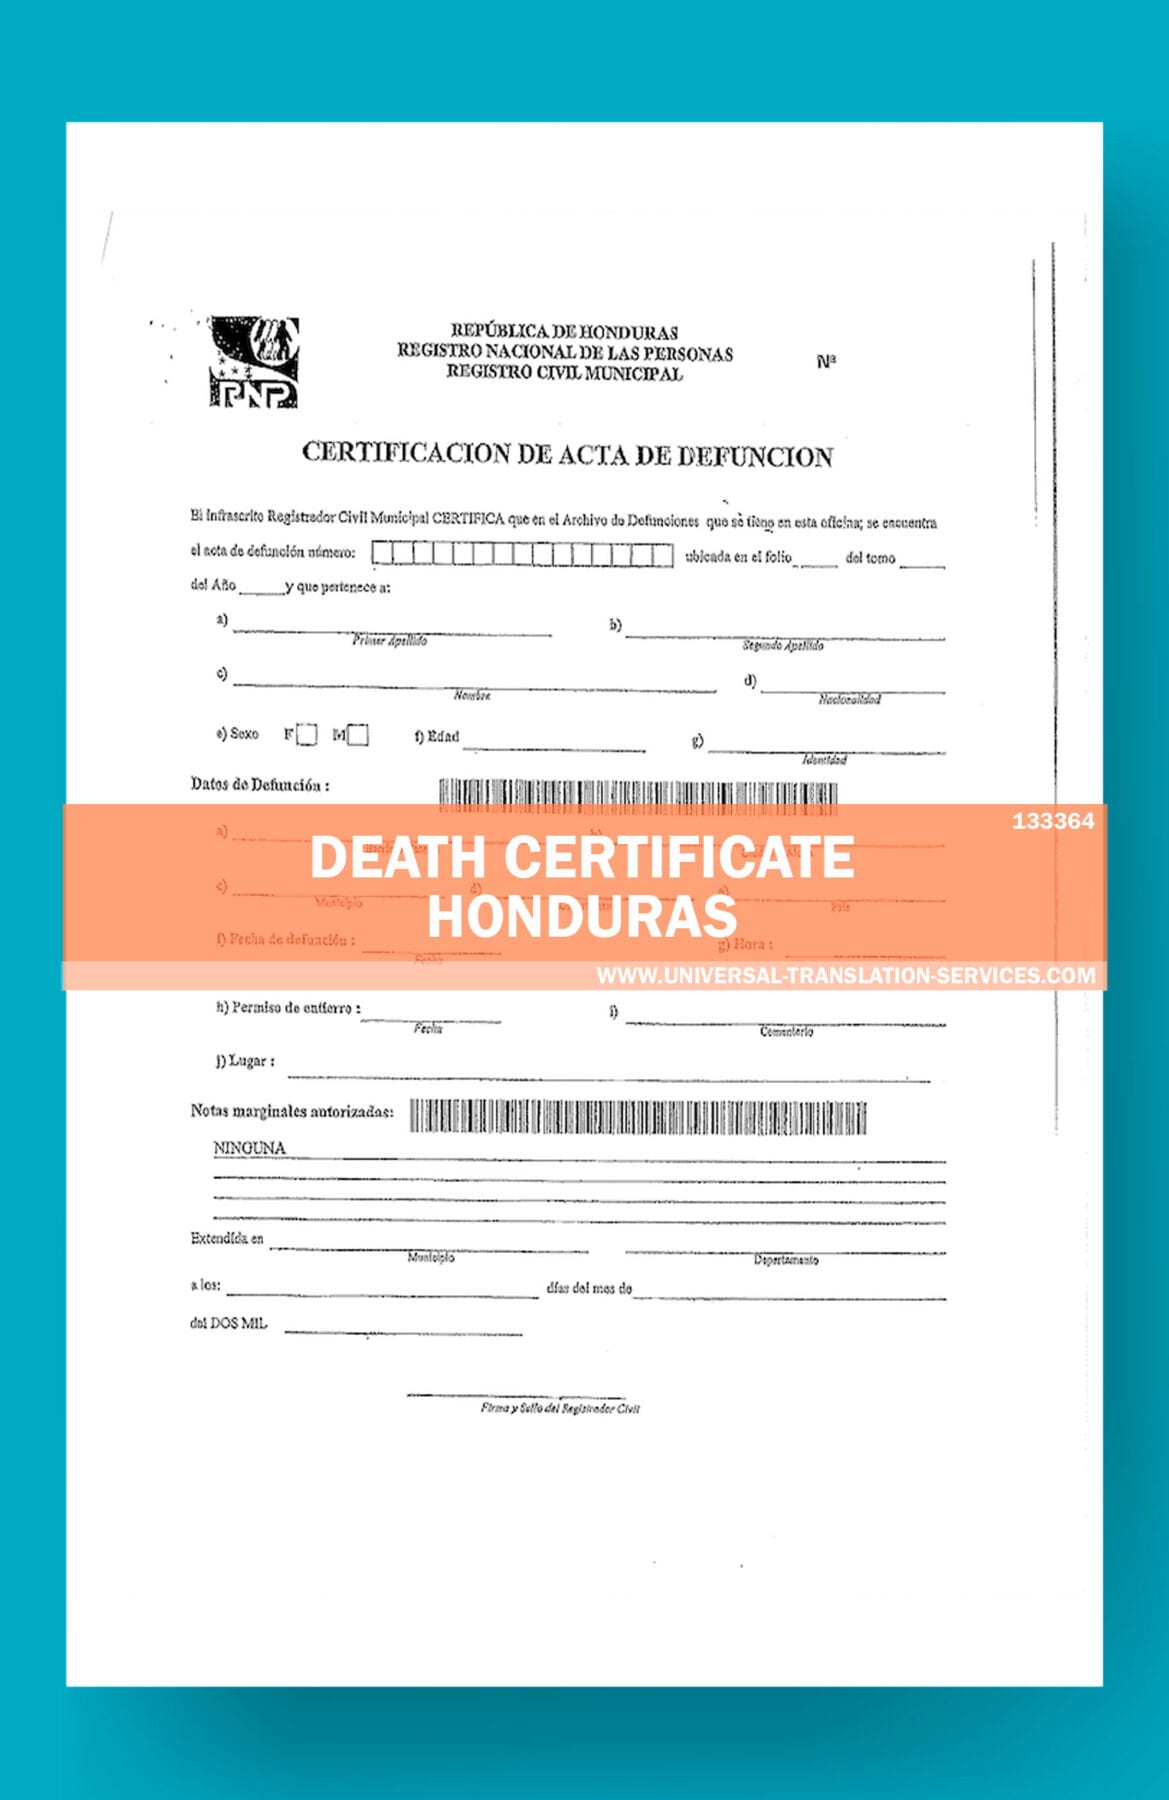 Death Certificate Honduras #21 Within Death Certificate Translation Template